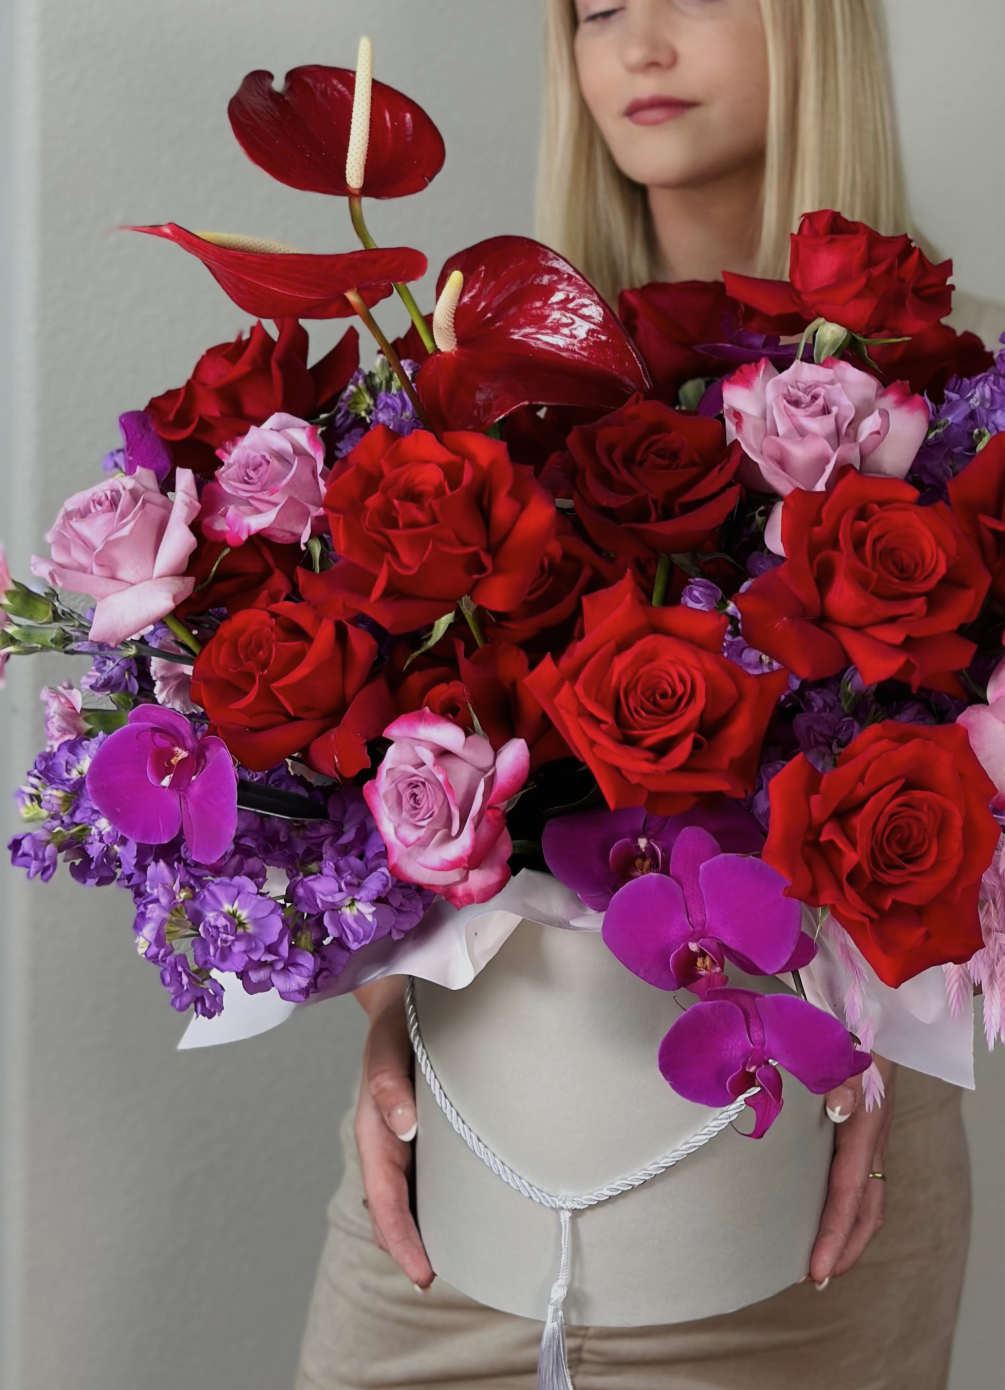 Introducing our elegant hatbox floral arrangement, &quot;Blazing Hearts.&quot; This exquisite design features